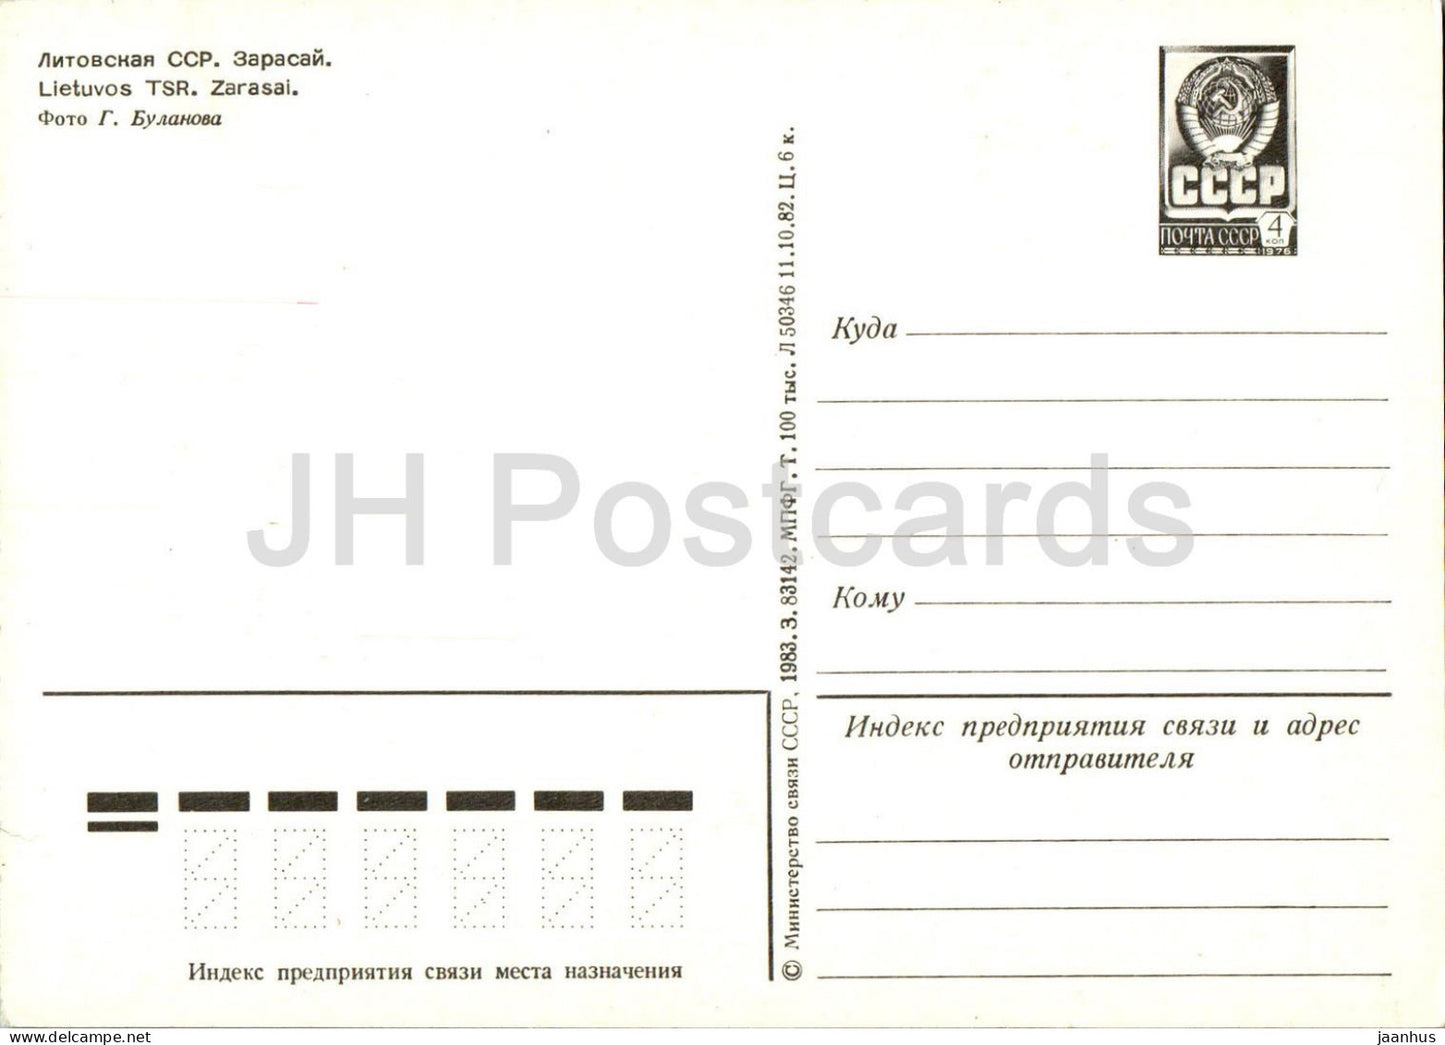 Zarasai - entier postal - 1983 - Lituanie URSS - inutilisé 